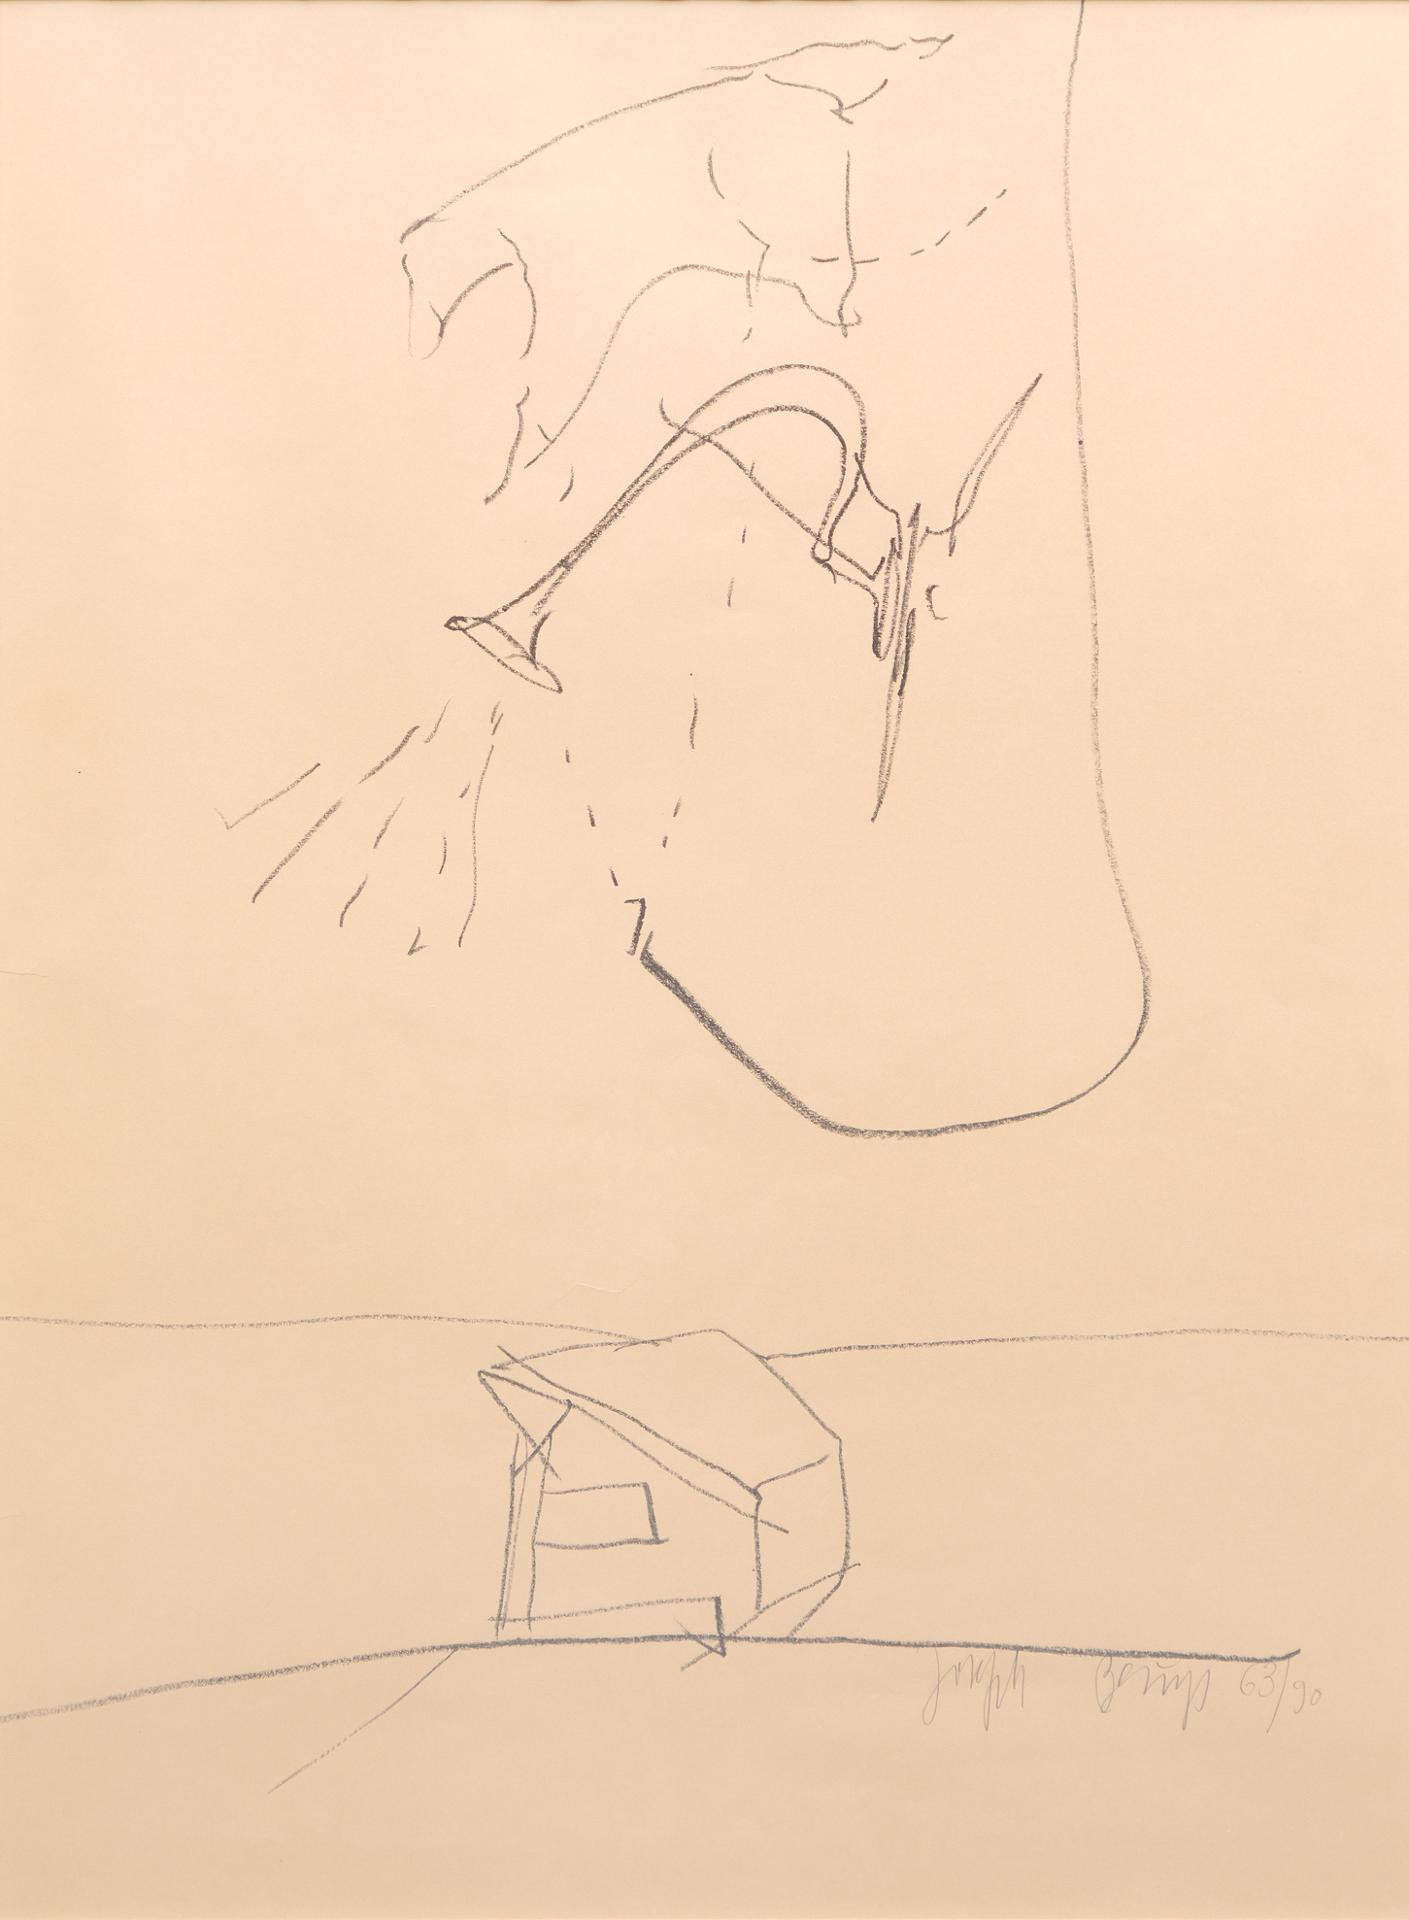 Joseph Beuys (1921-1986) - Constellation of the Dipper, 1981